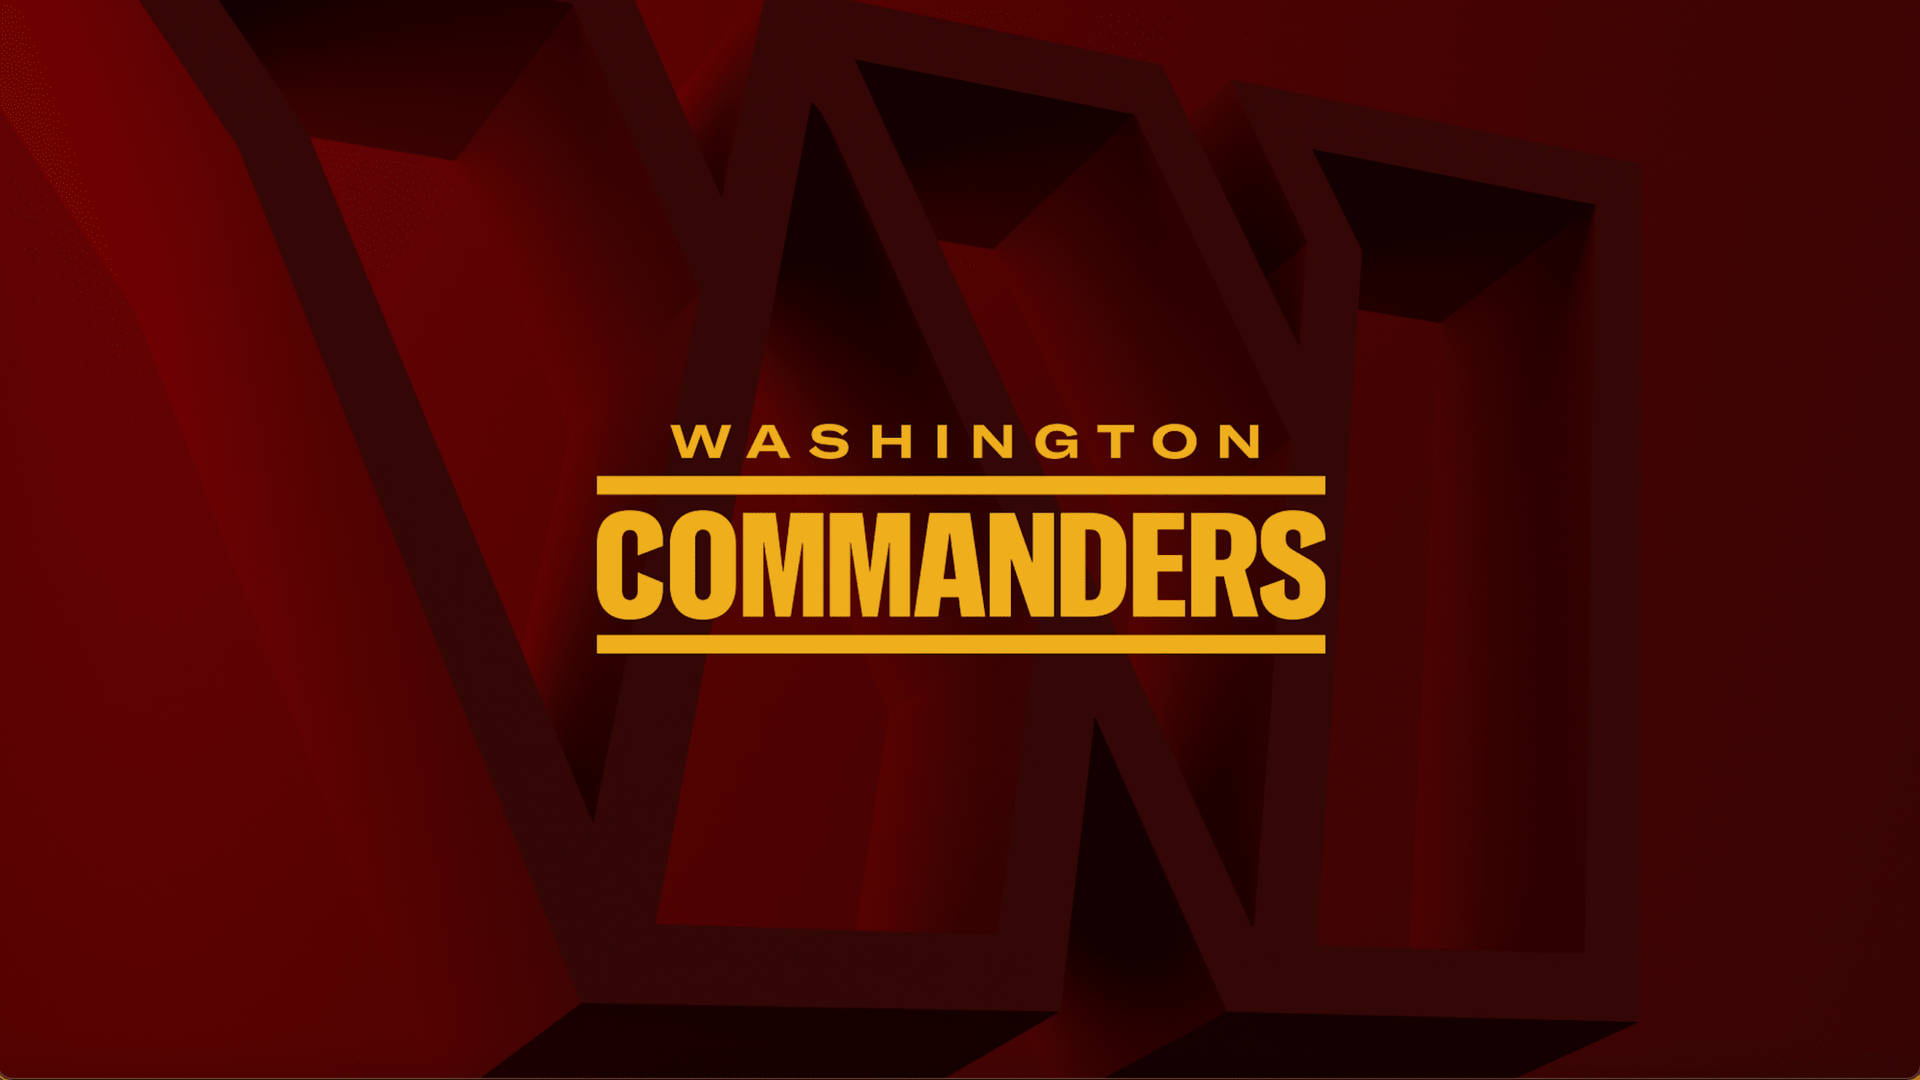 Free Washington Commanders Wallpaper Downloads, [100+] Washington  Commanders Wallpapers for FREE 